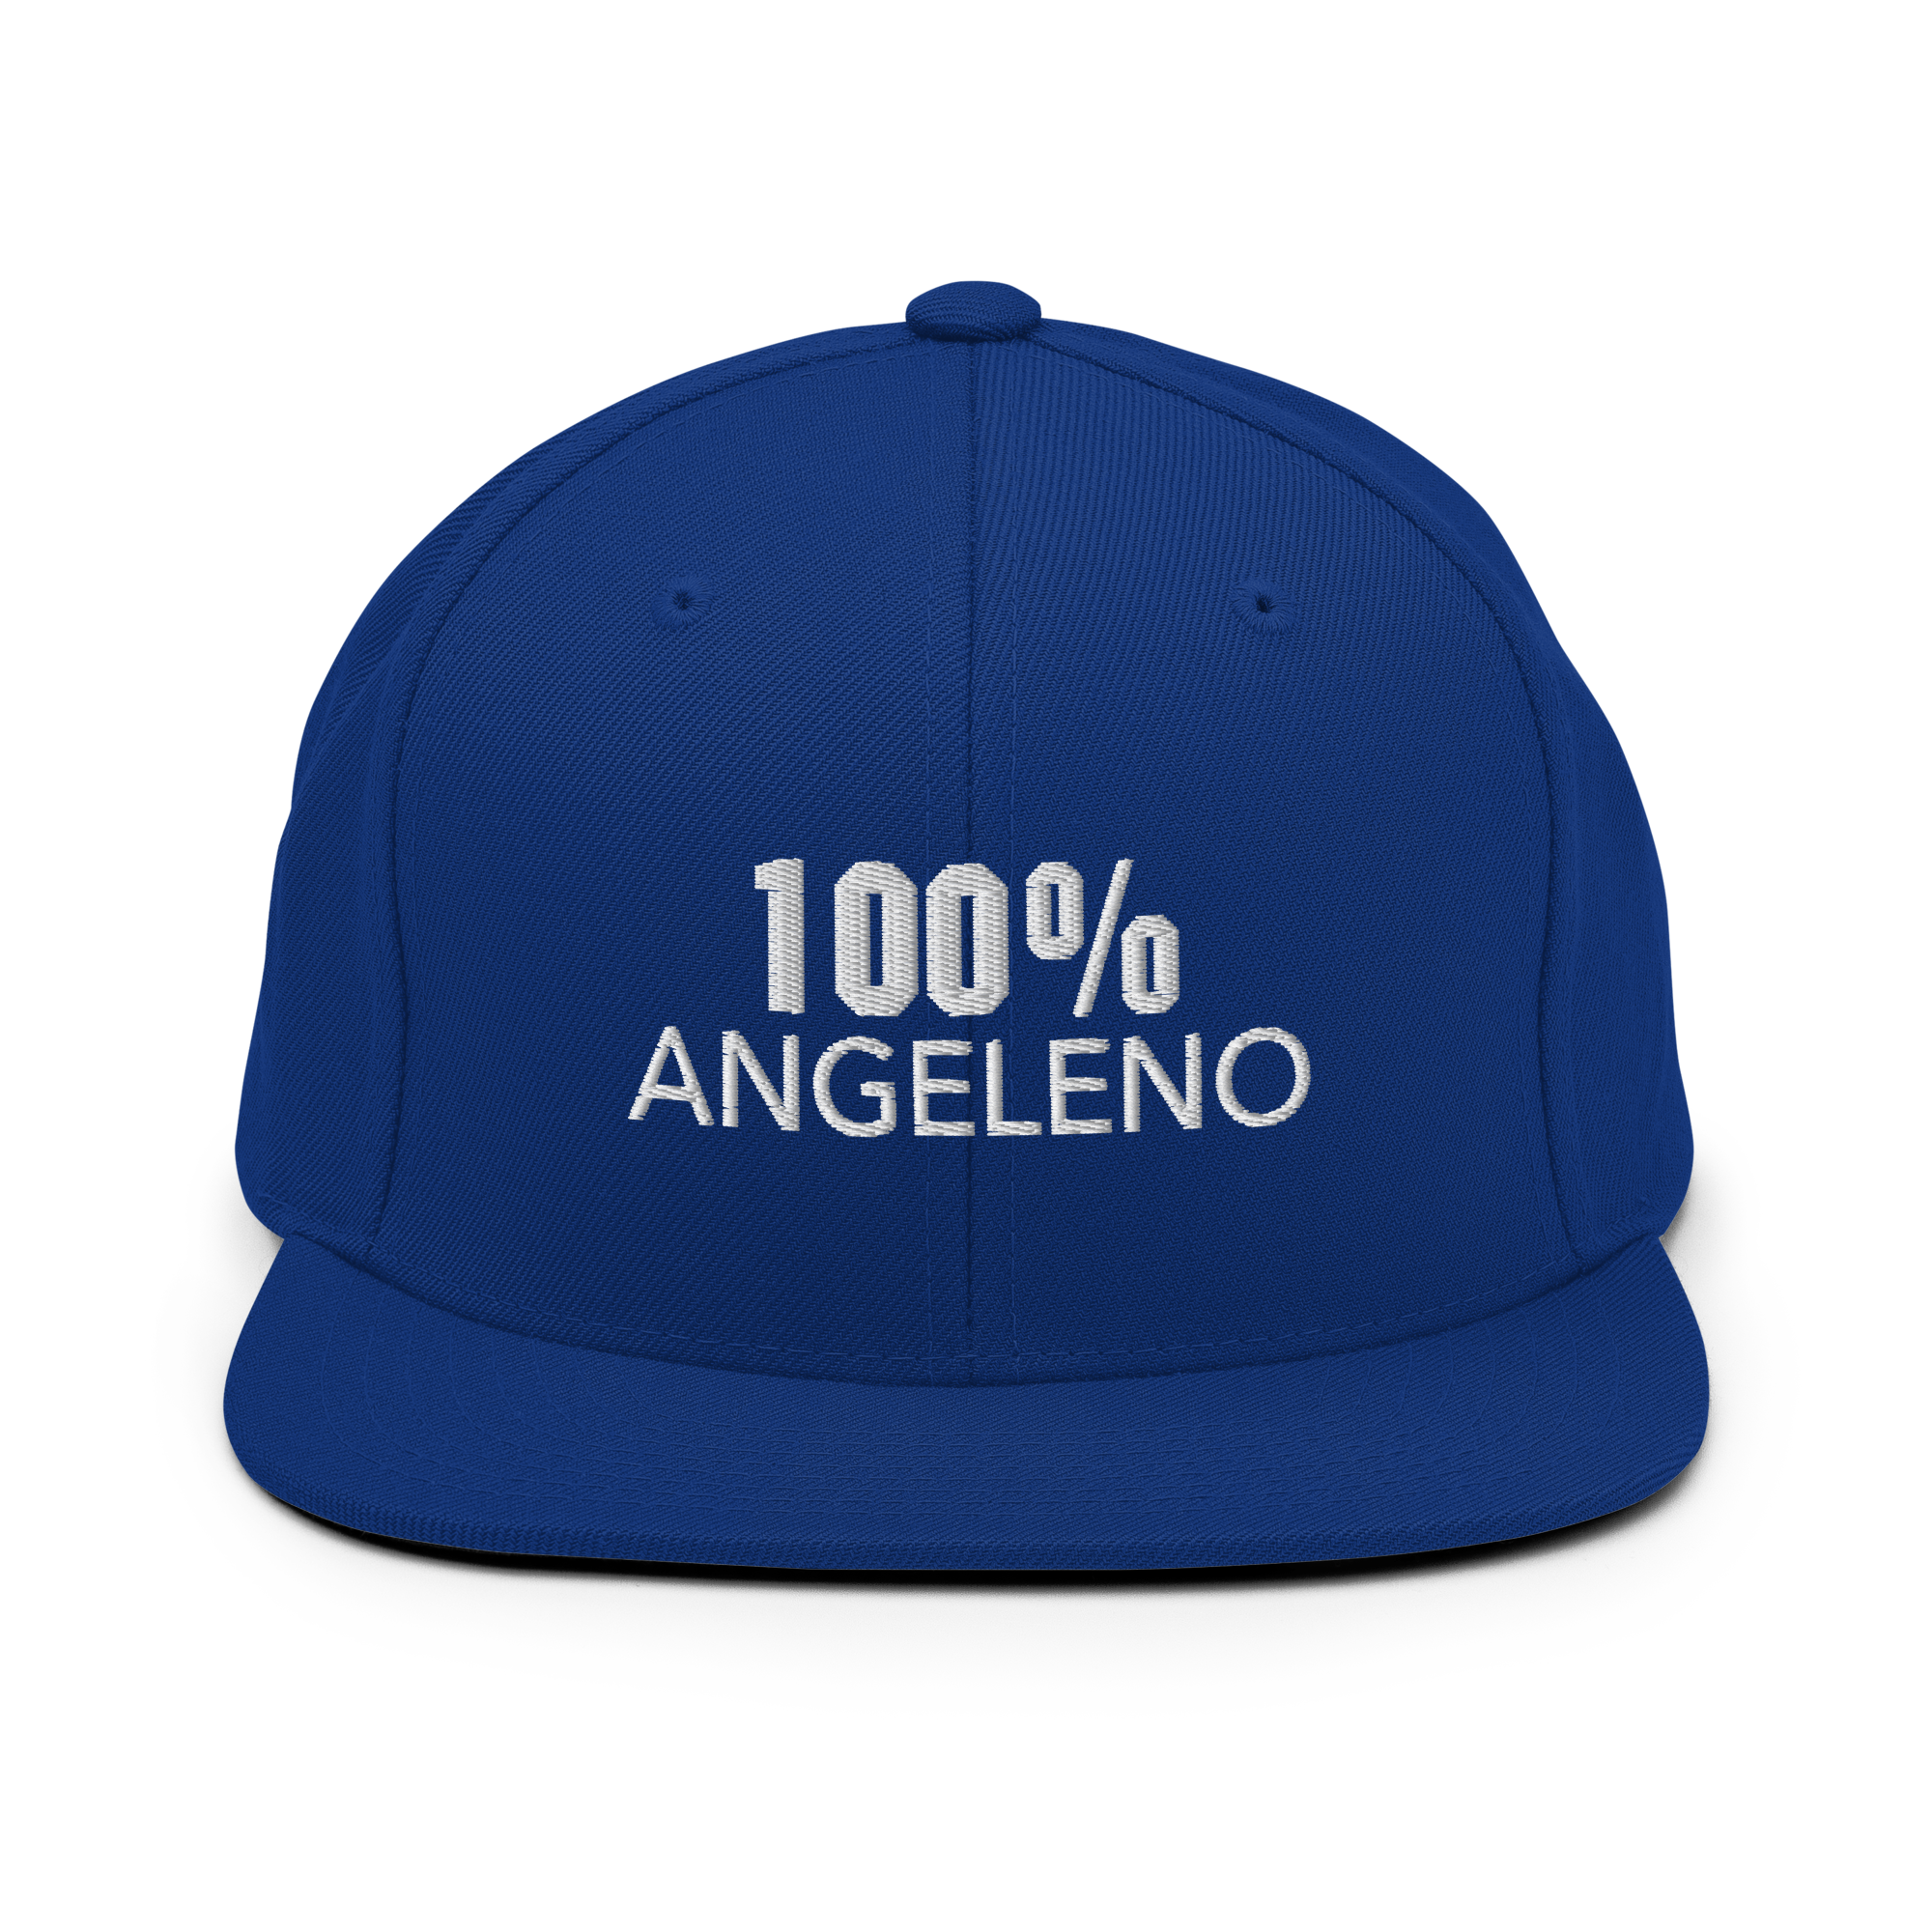 100% ANGELENO Snapback Baseball Hat